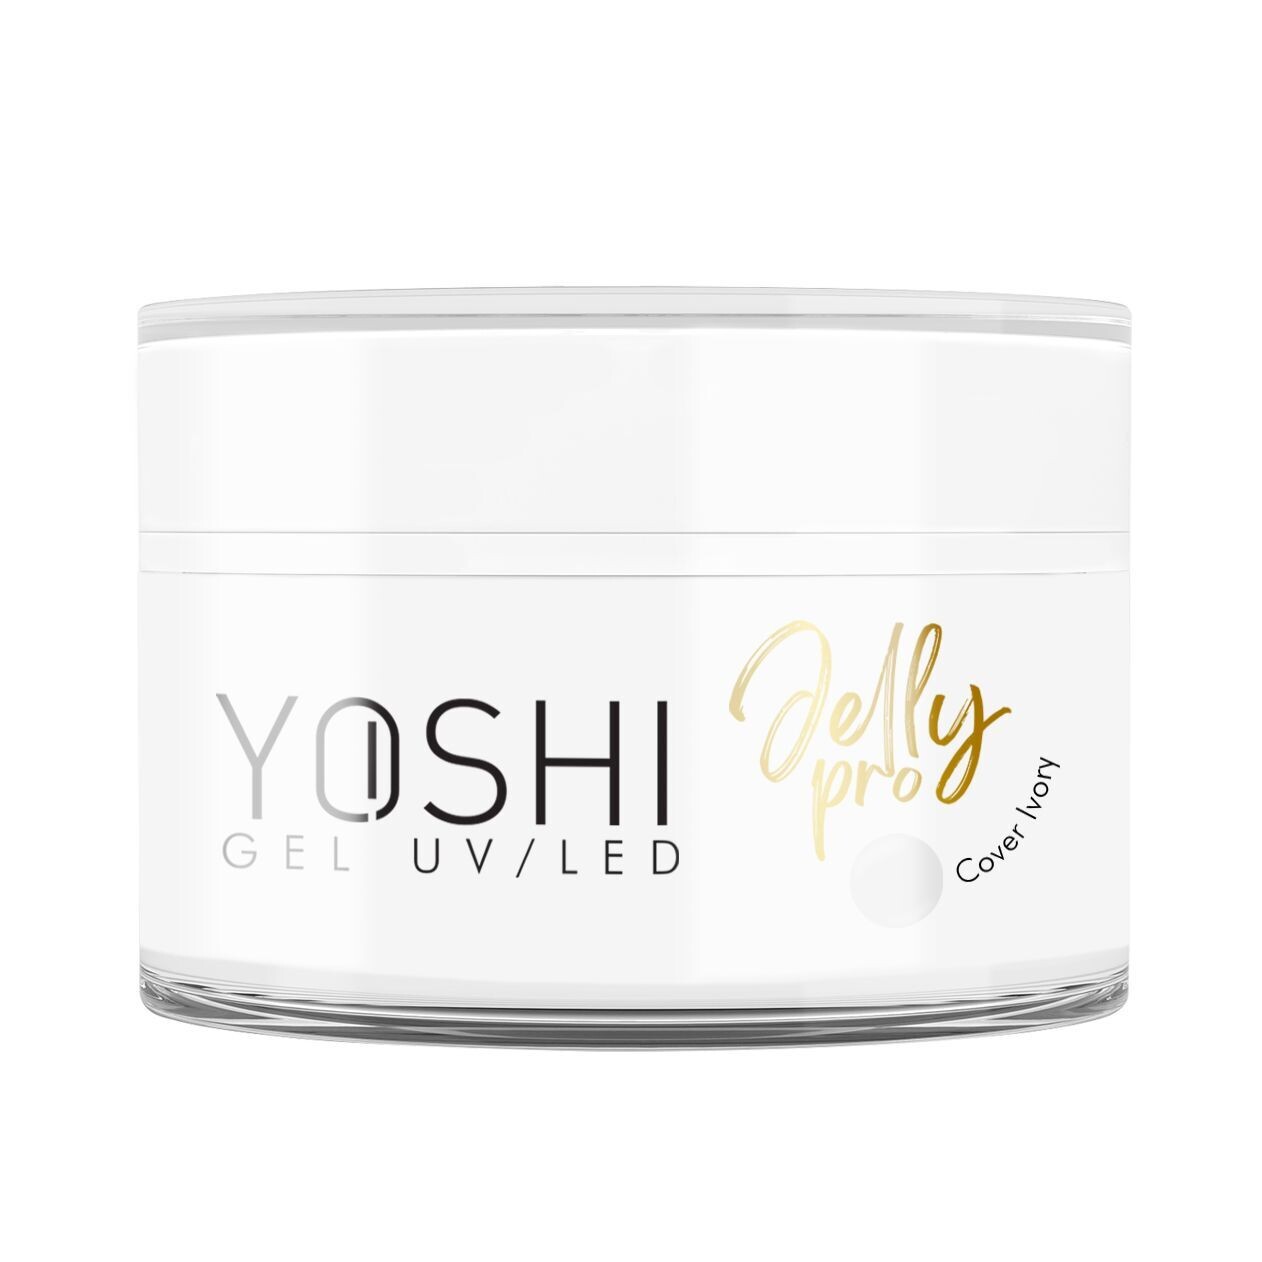 Yoshi Jelly Pro Uv Gel Cover Ivory 50 ml